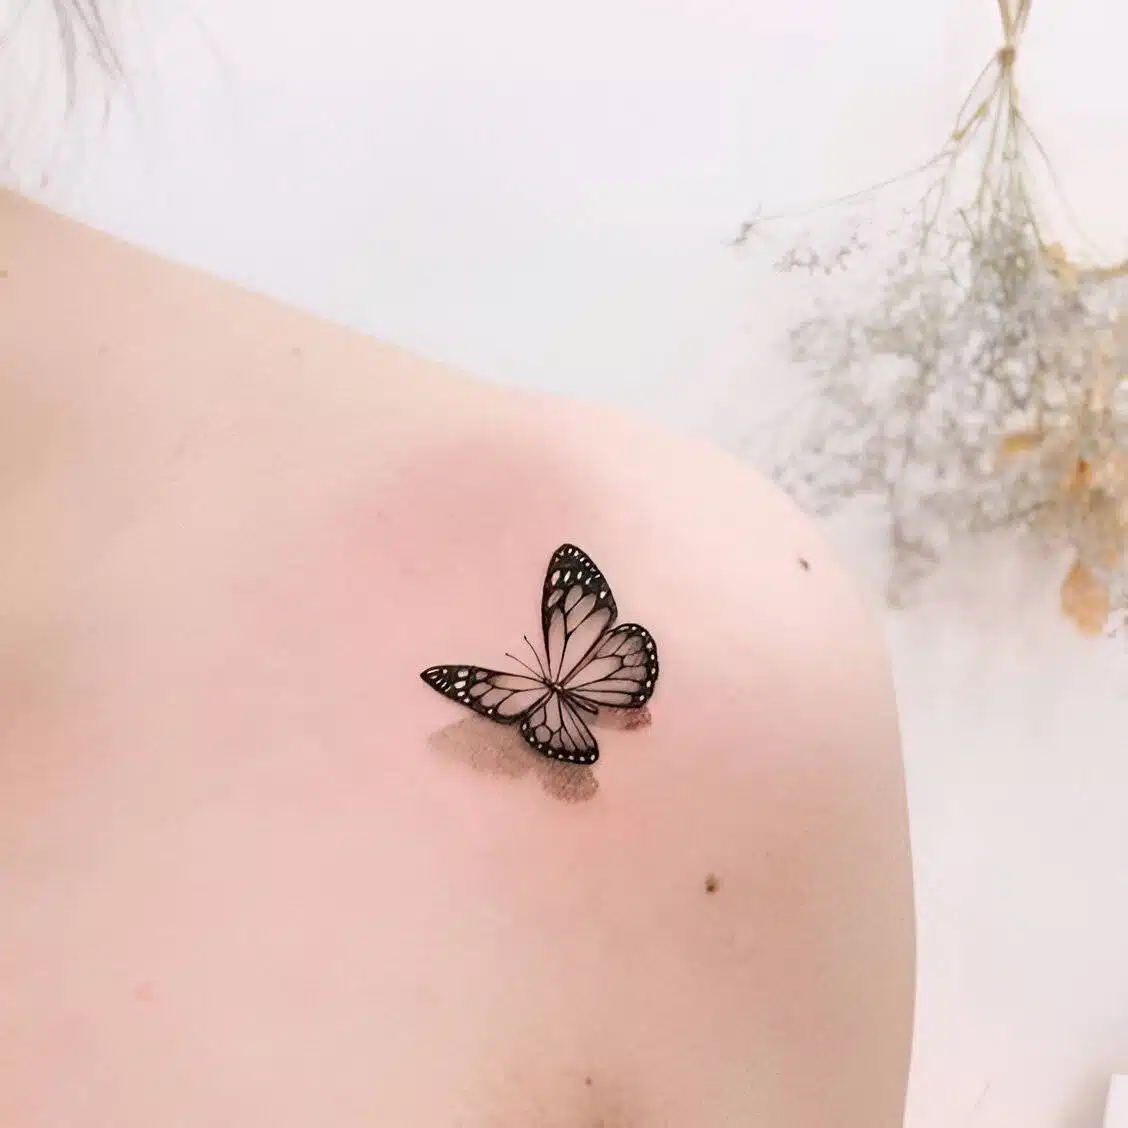 25 Simple Yet Elegant Tiny Tattoos For Women - 165